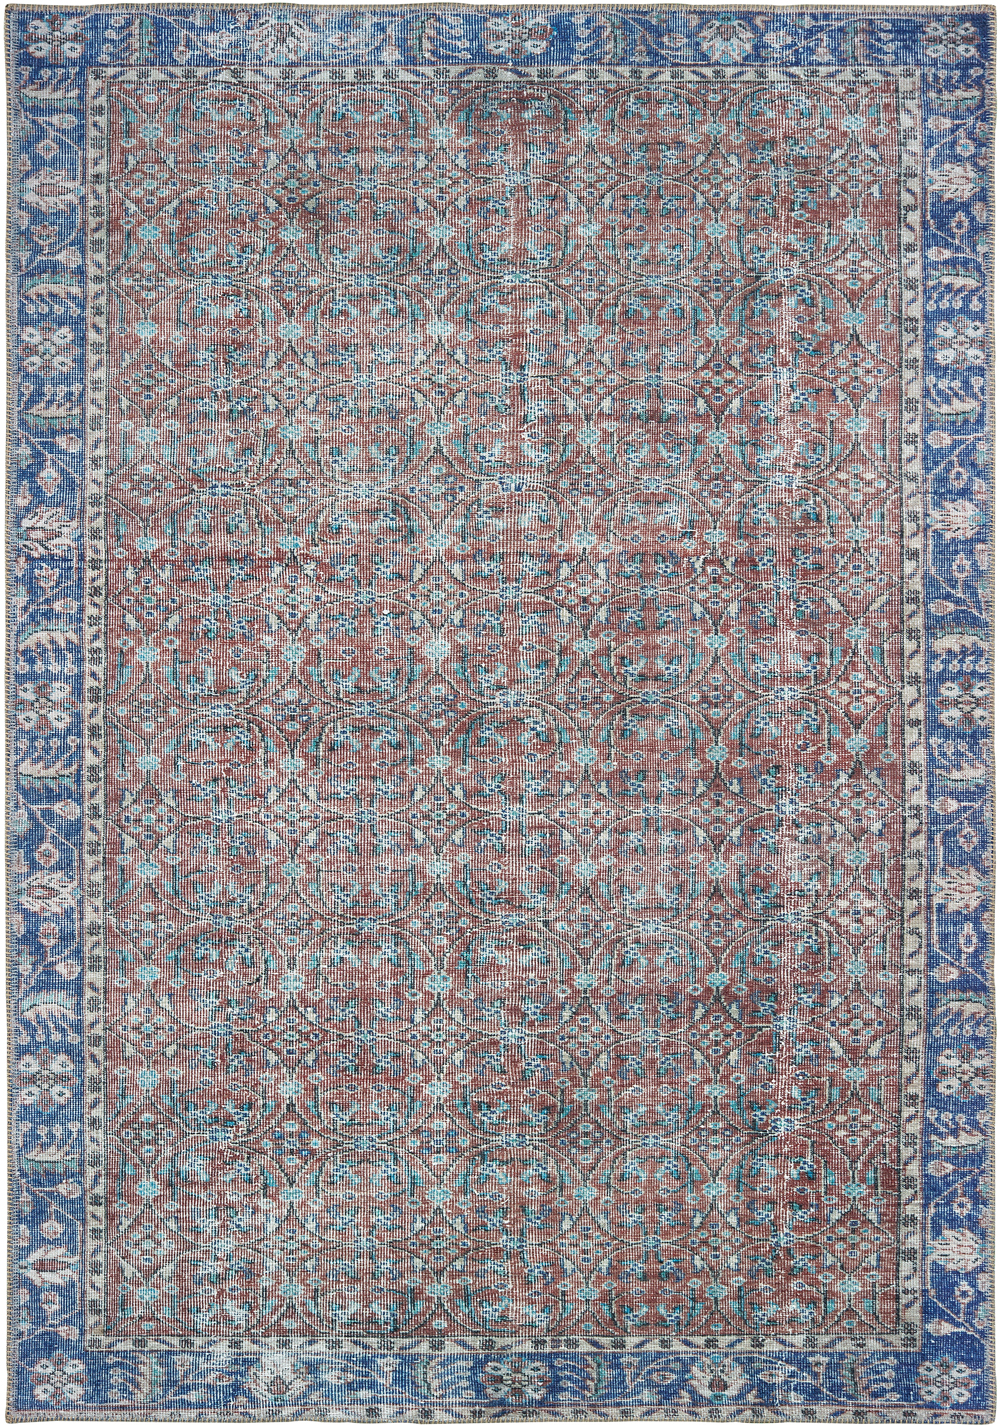 Oriental Weavers SOFIA 85815 Blue Rug